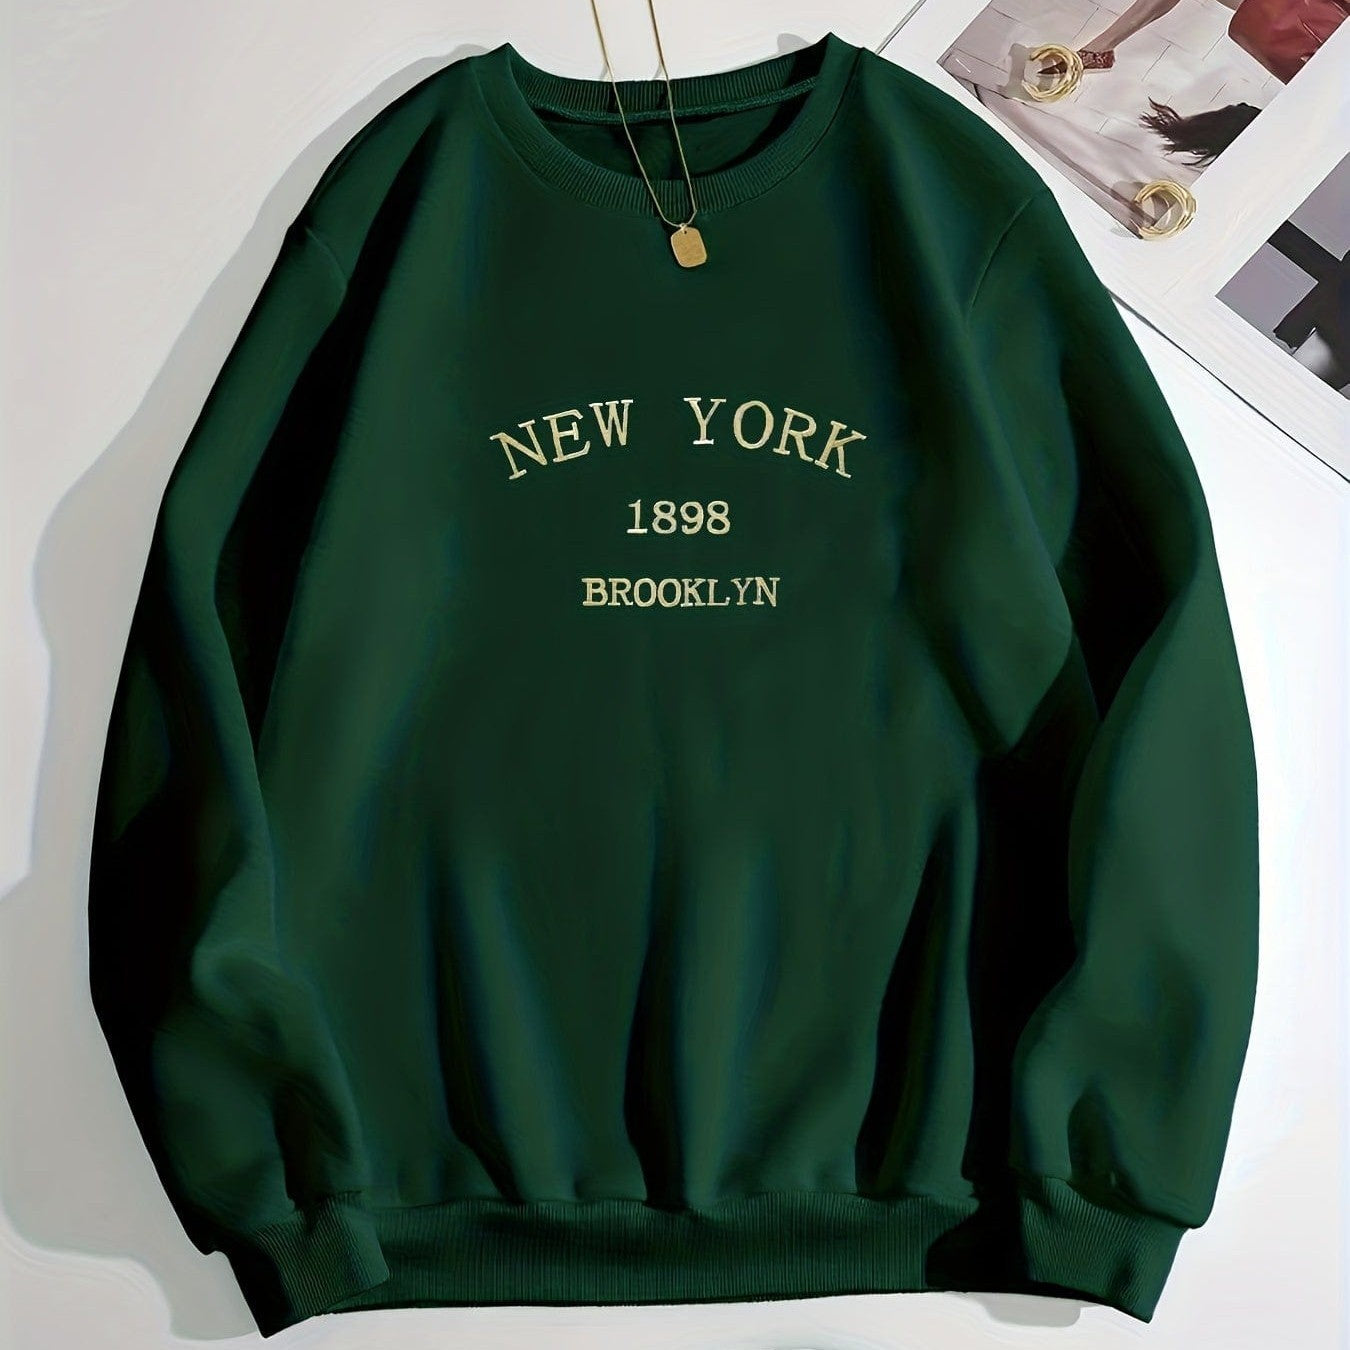 Bedrucktes Sweatshirt für Herren New York Brooklyn 1899